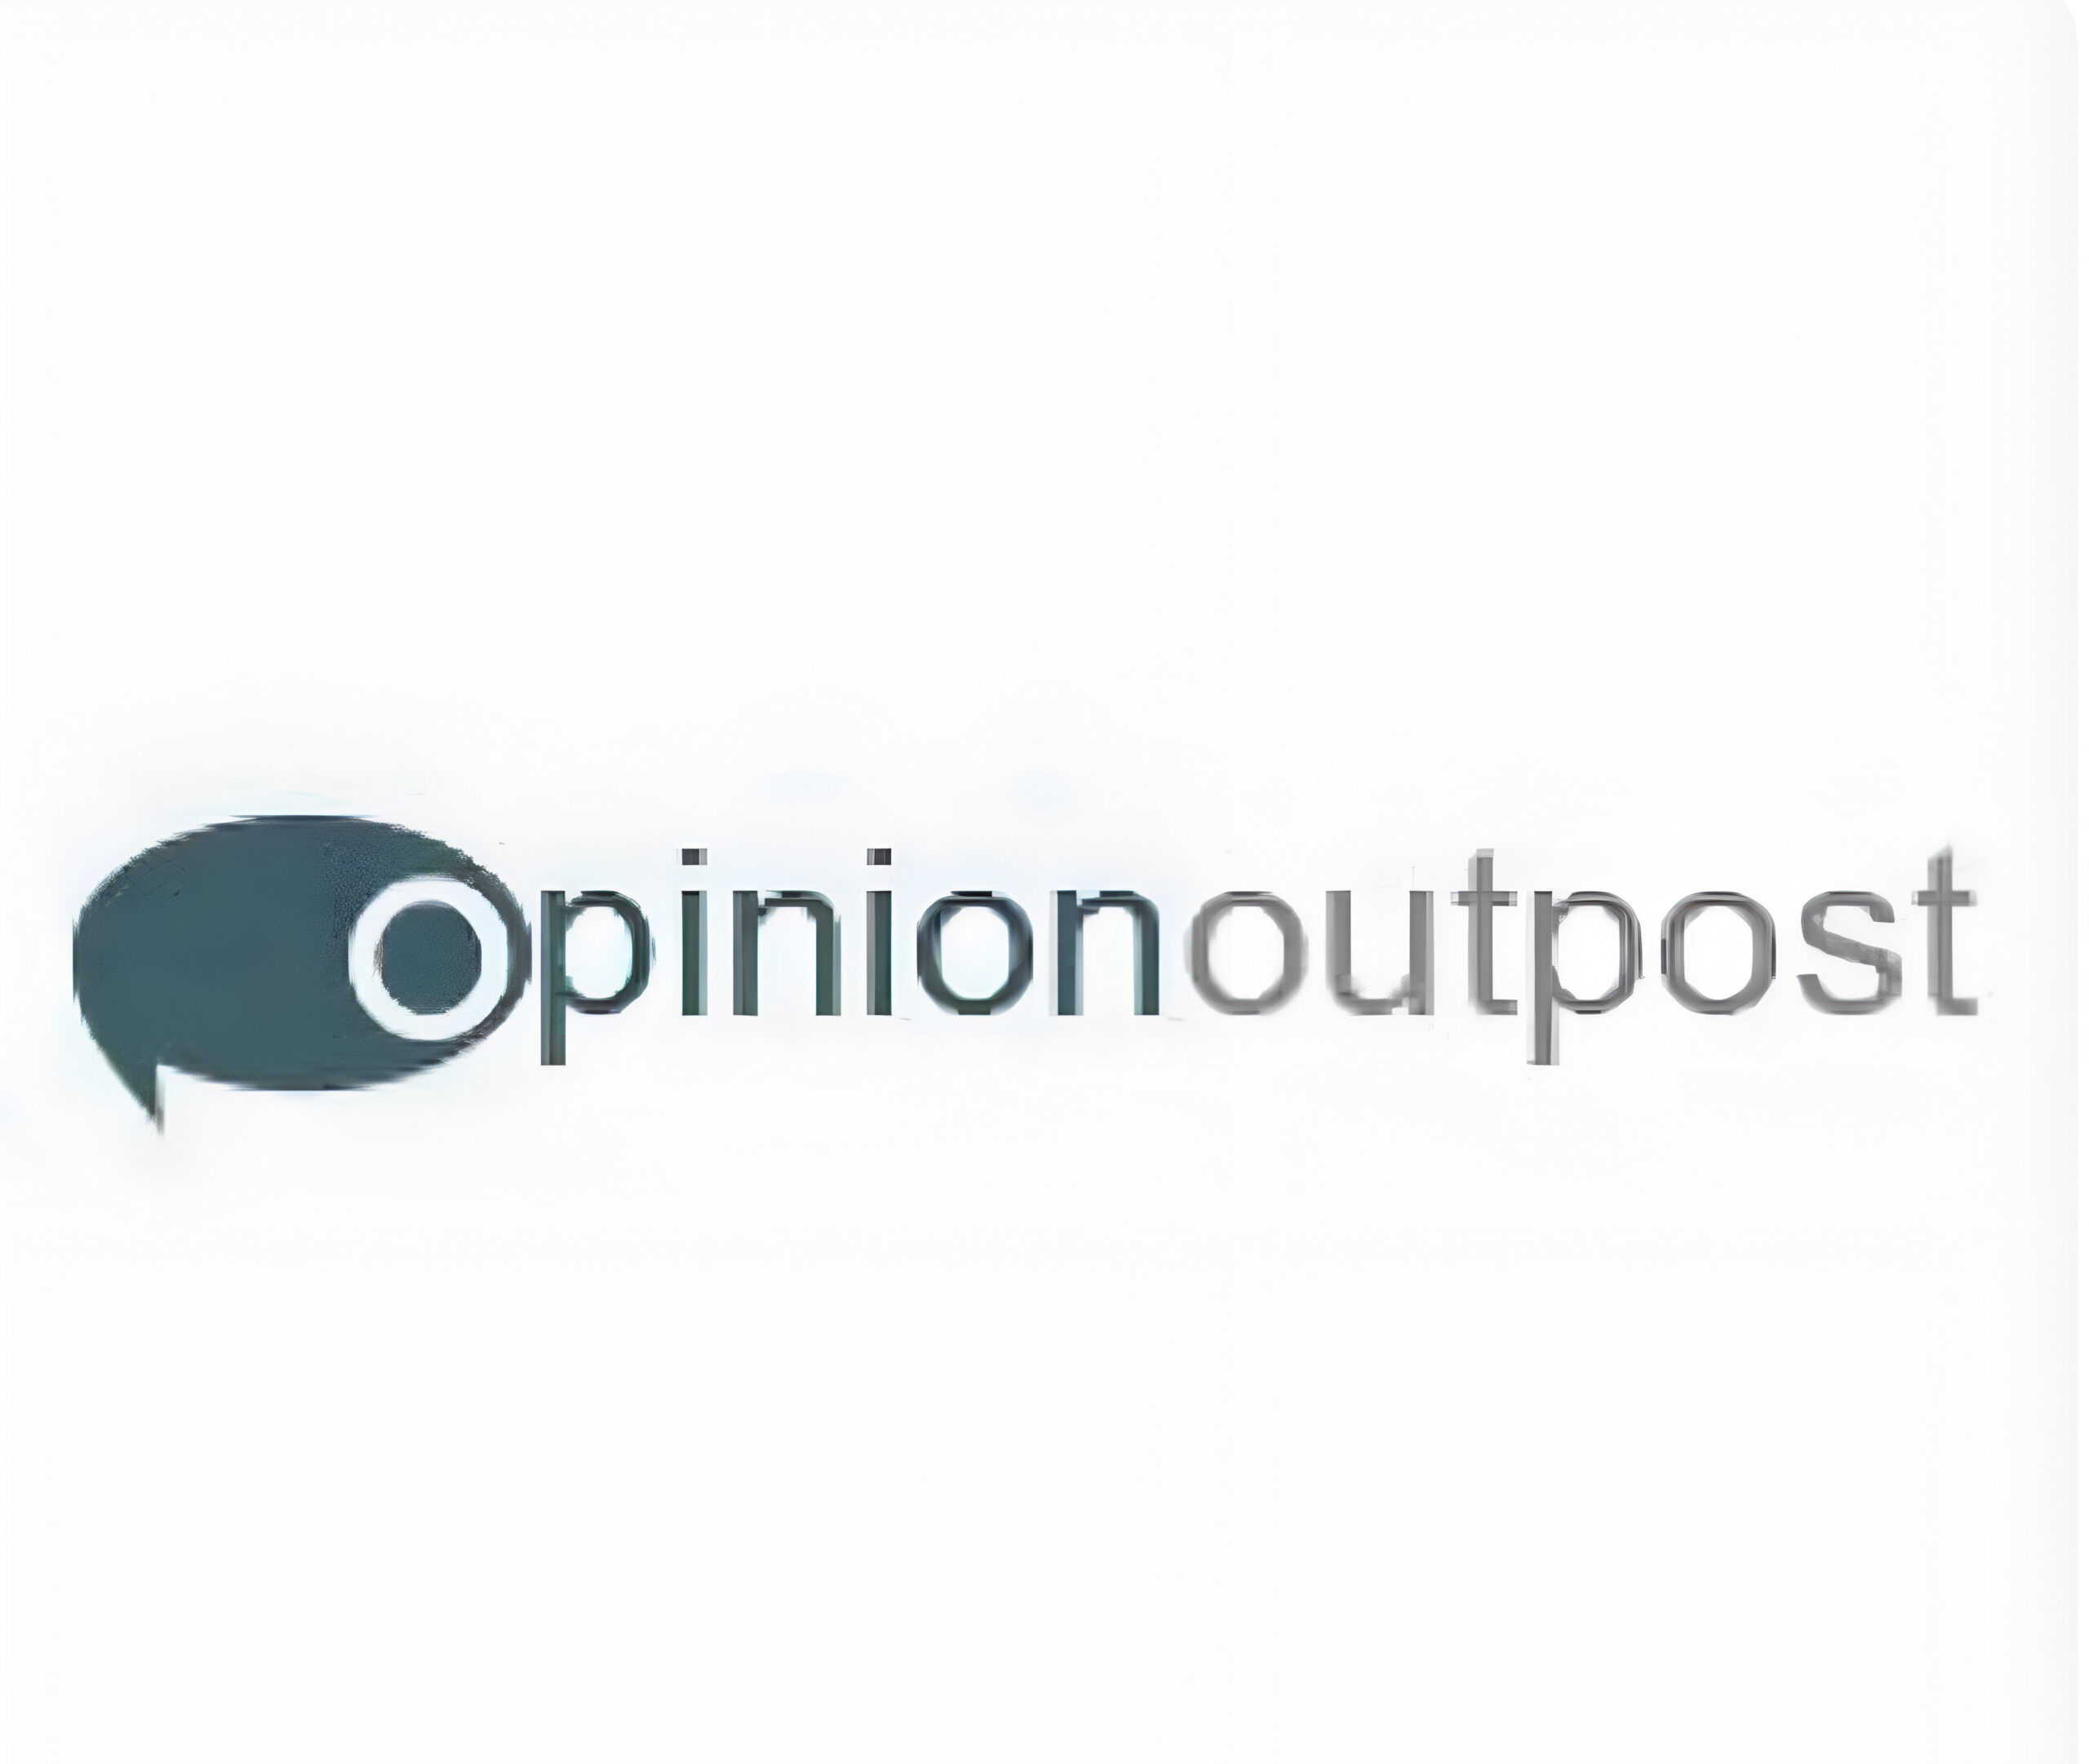 opinion outpost logo